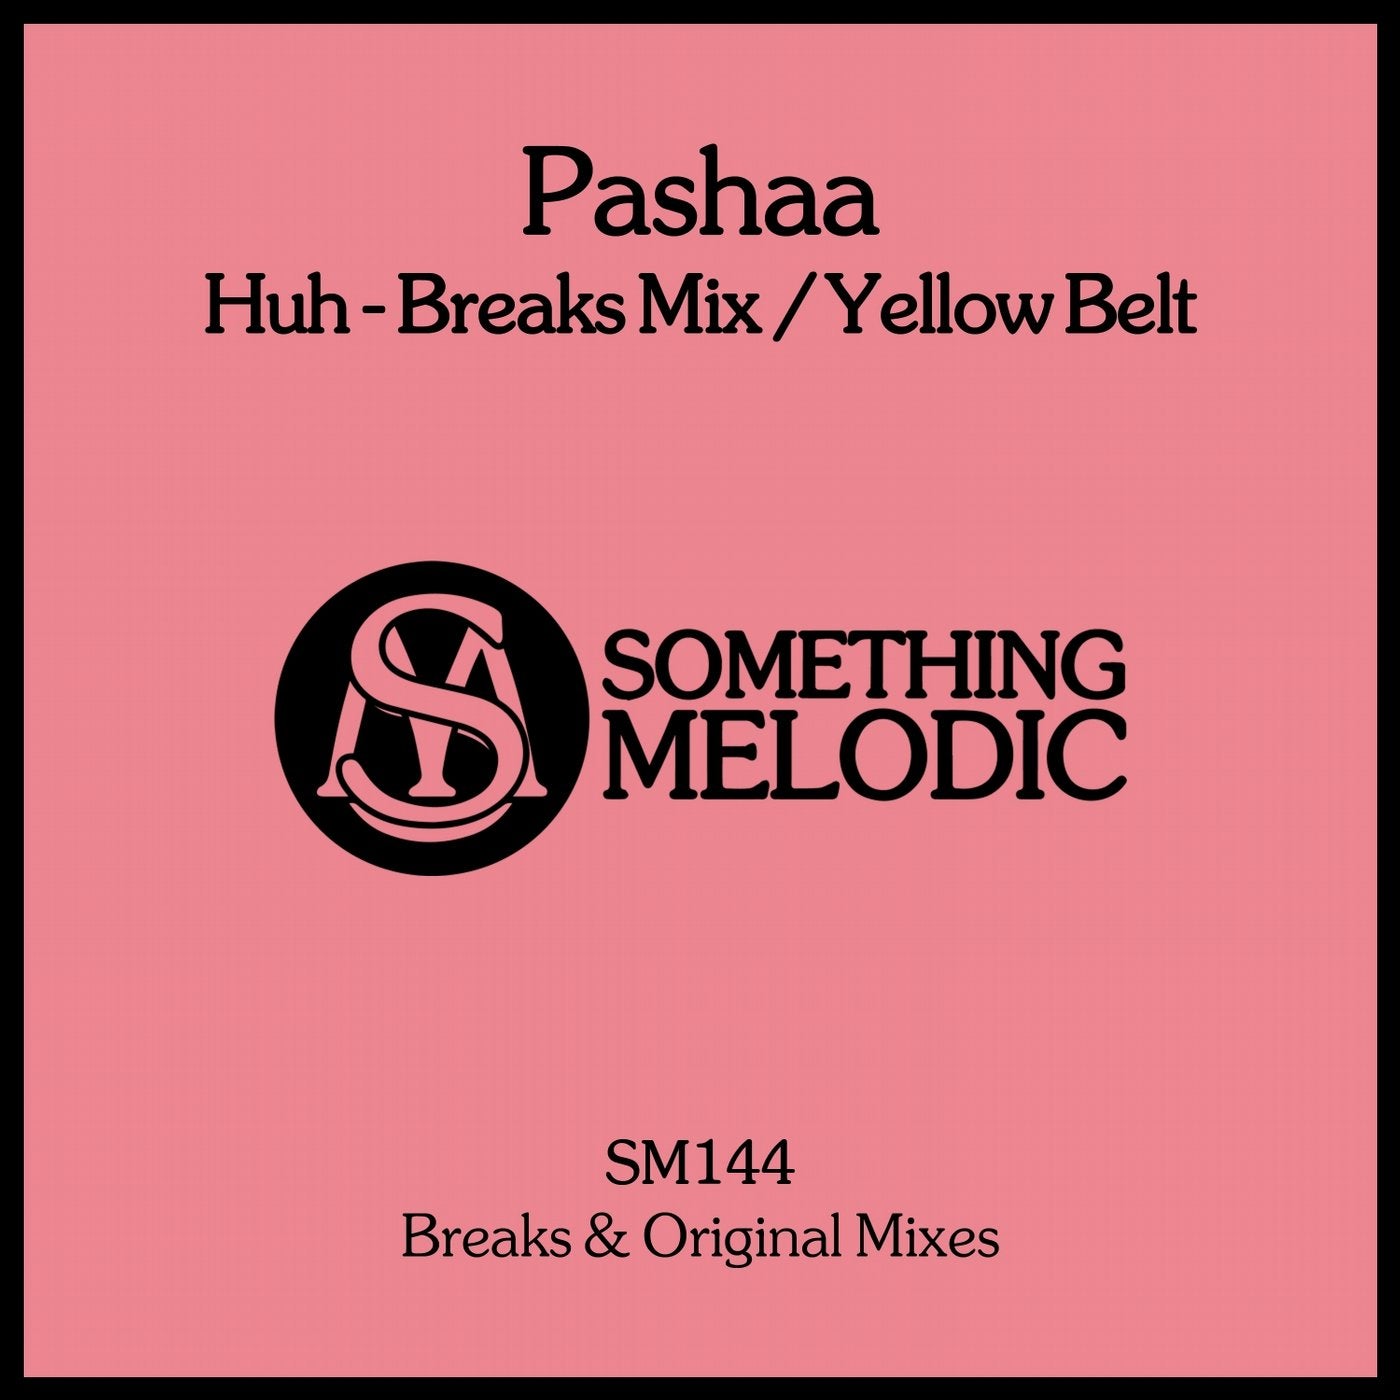 Huh - Breaks Mix / Yellow Belt